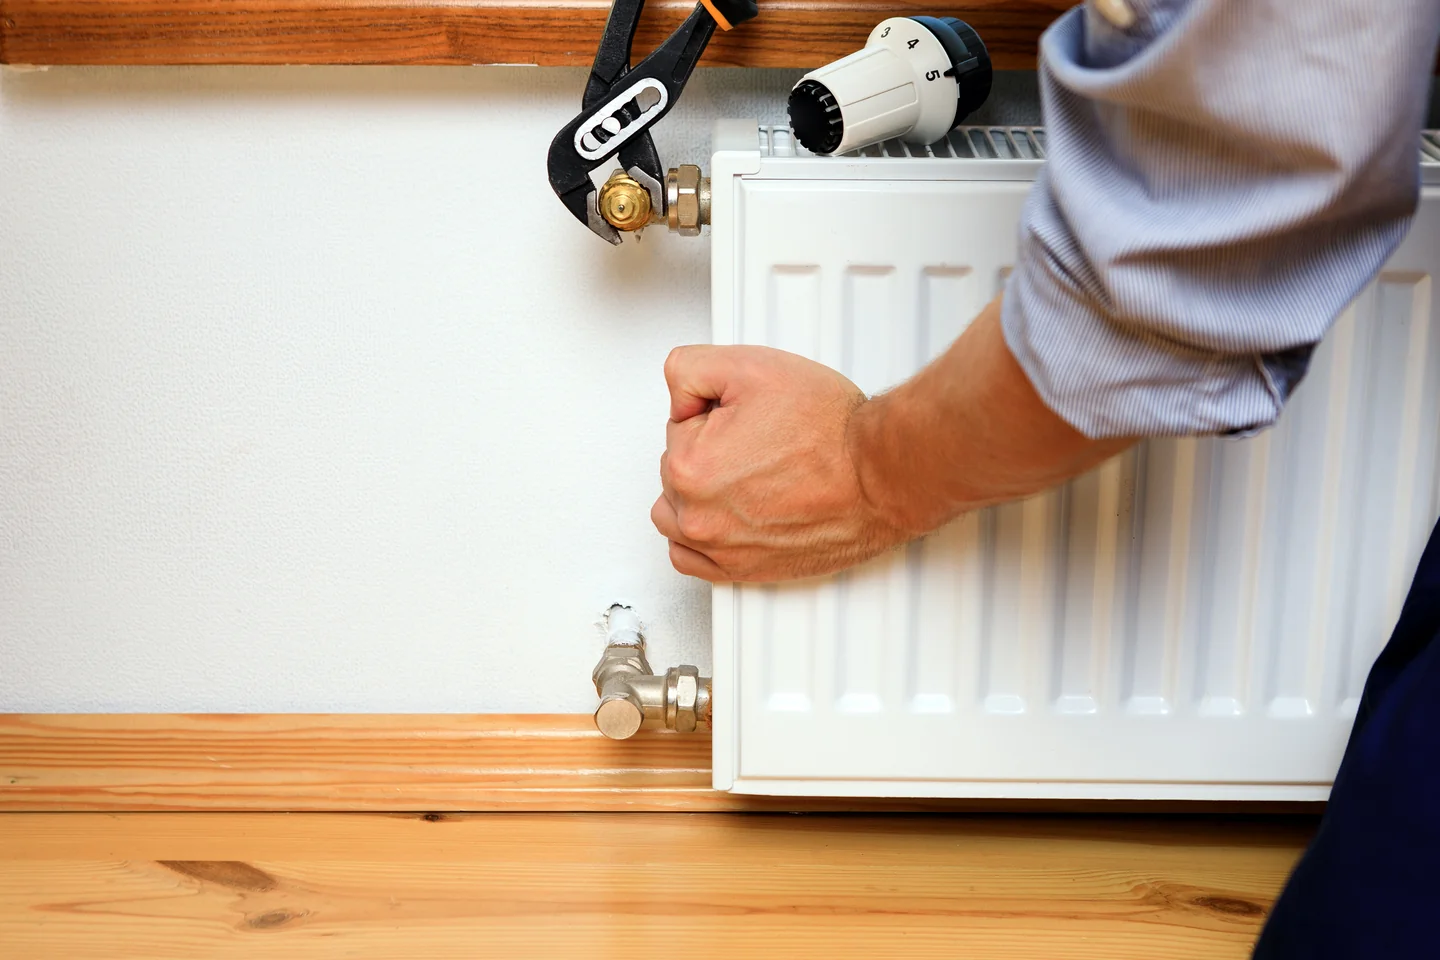 repair heating radiator close up man repairing radiator with wrench removing air from radiator